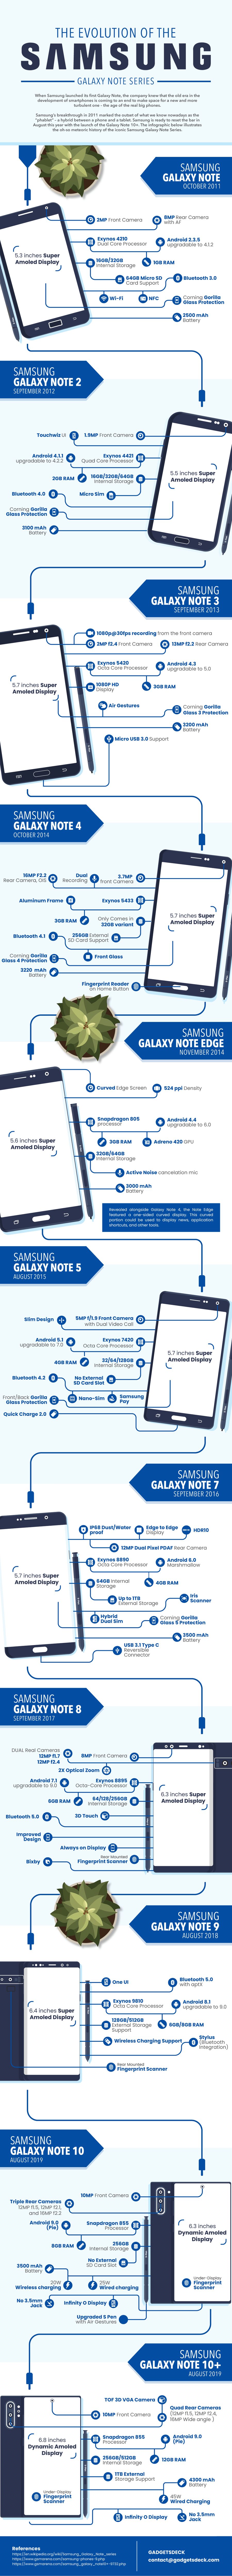 Galaxy Note Series Evolution